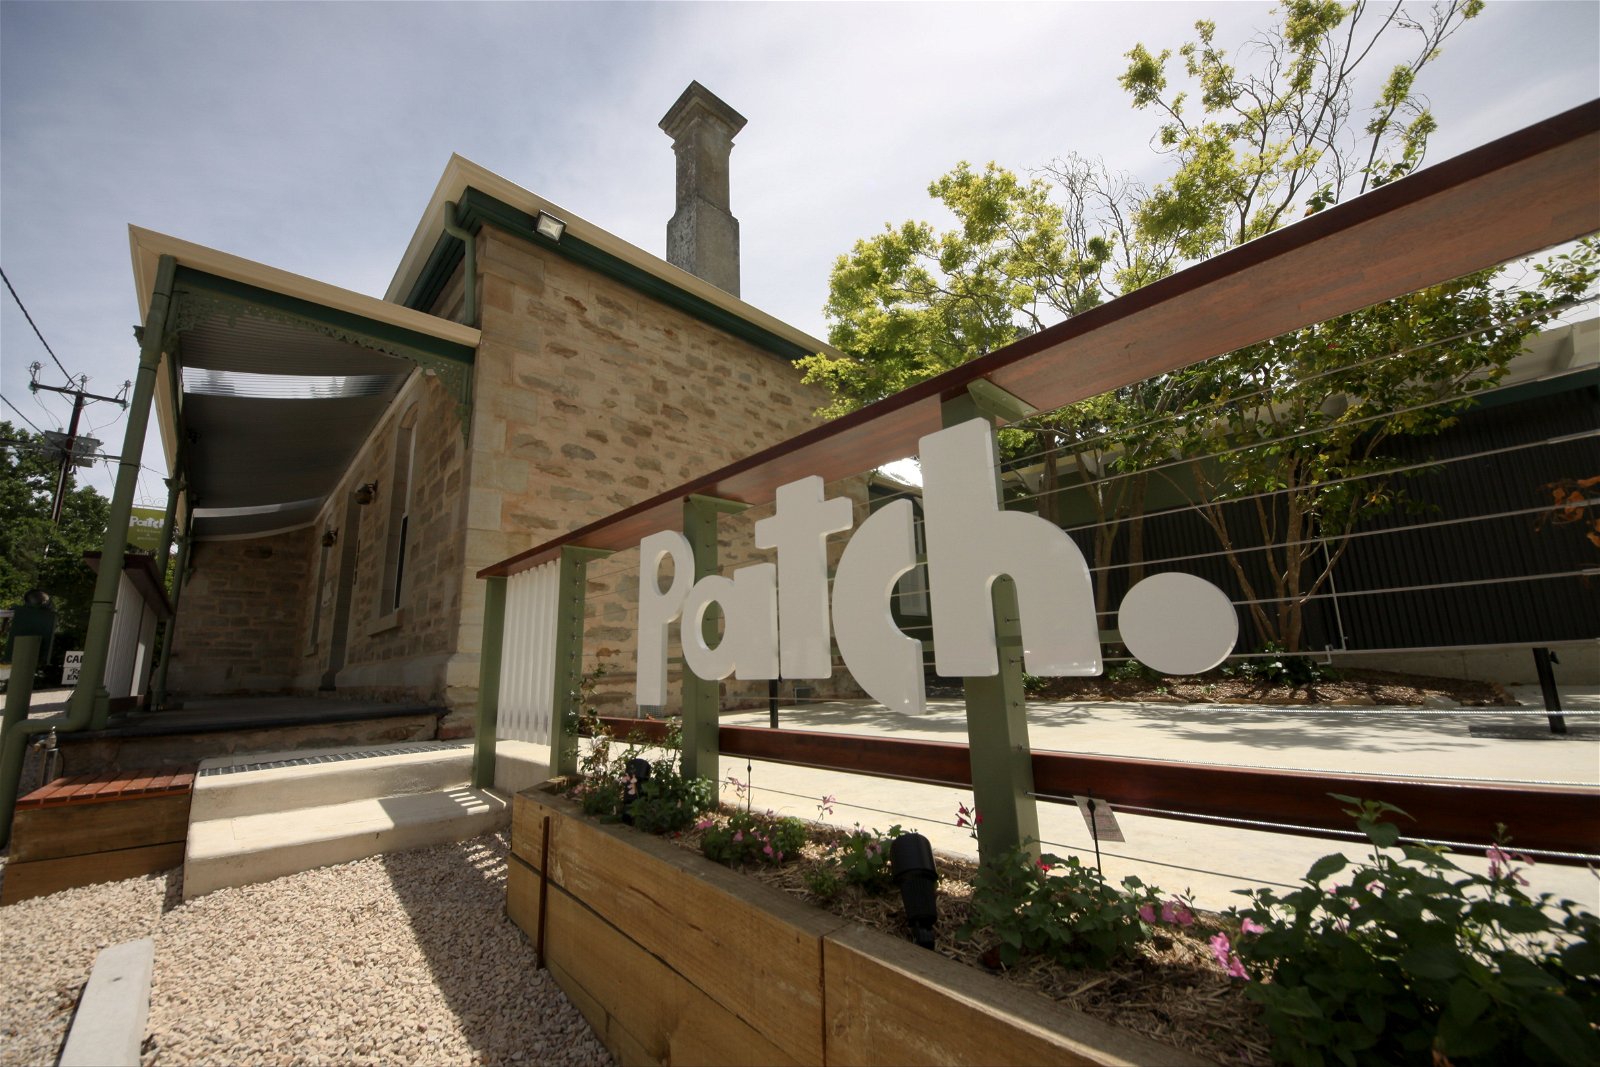 Patch Kitchen and Garden